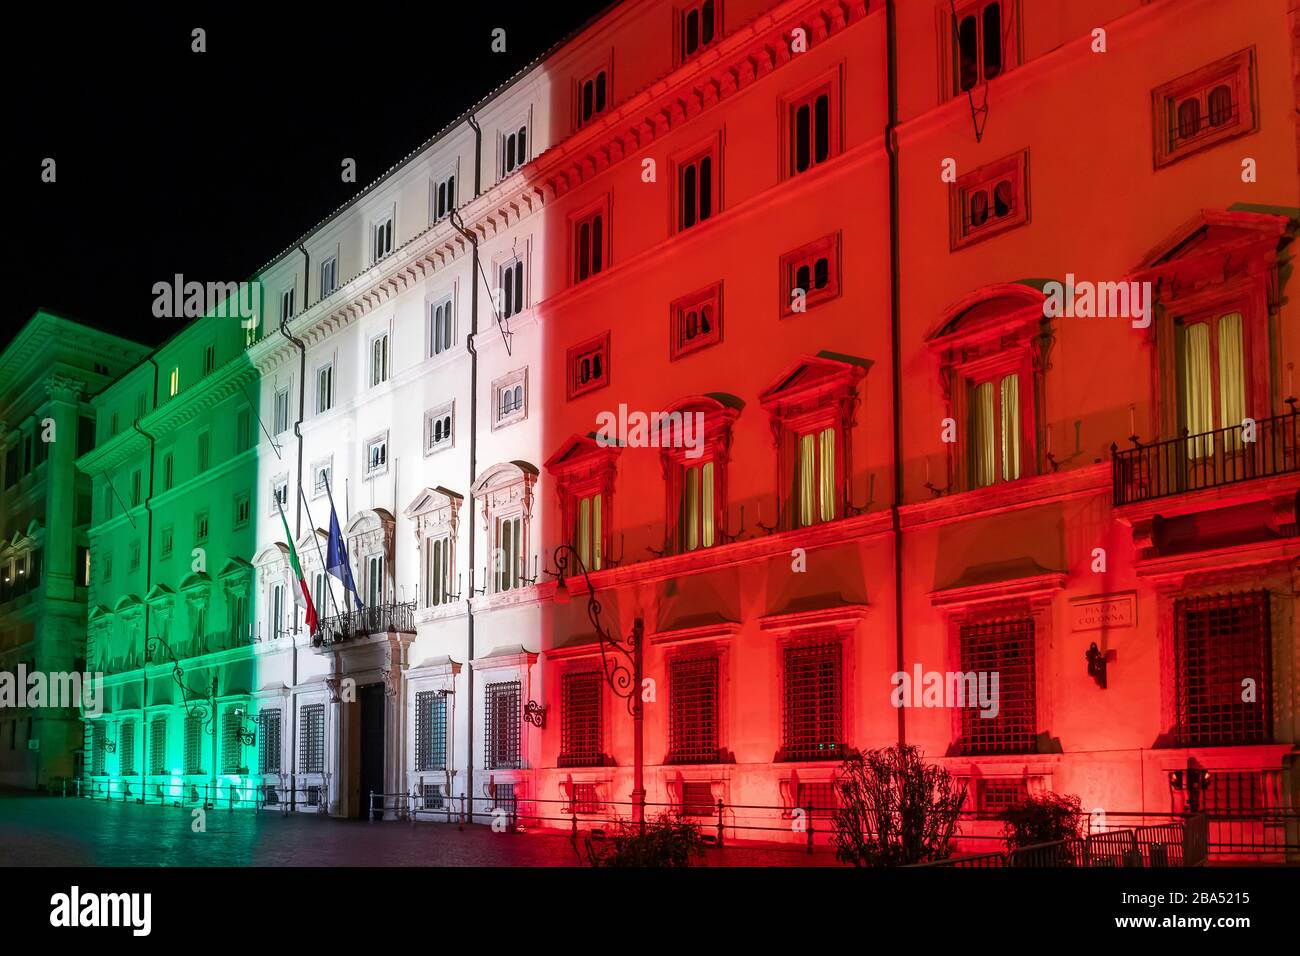 Rome, Italy - March 24, 2020: Palazzo Chigi, seat of the Italian government, facade of the building illuminated with the colors of the Italian flag. Coronavirus emergency Italy. Stock Photo